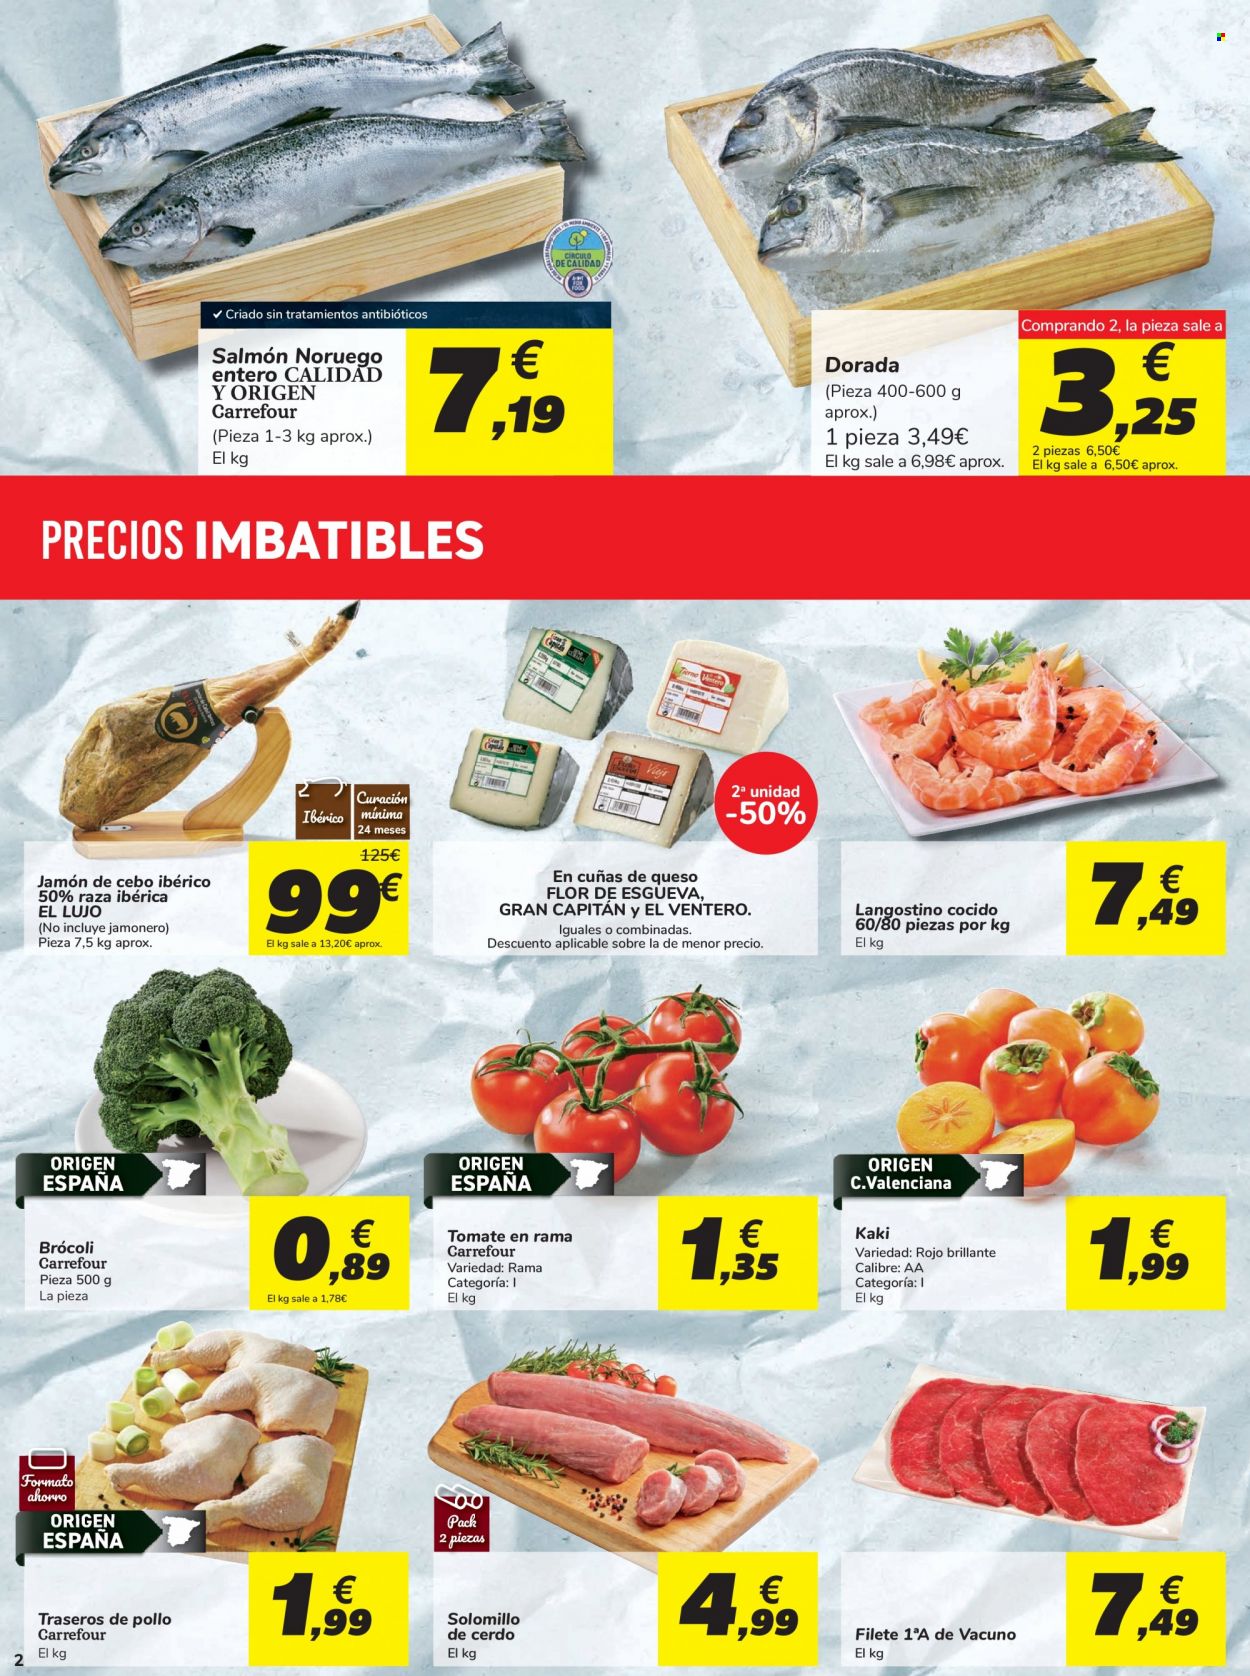 thumbnail - Folleto actual Carrefour - 20/10/21 - 26/10/21 - Ventas - solomillo, solomillo de cerdo, pollo, kaki, tomate, brócoli, dorada pescado, langostino, salmón, jamón, queso, jamonero. Página 2.